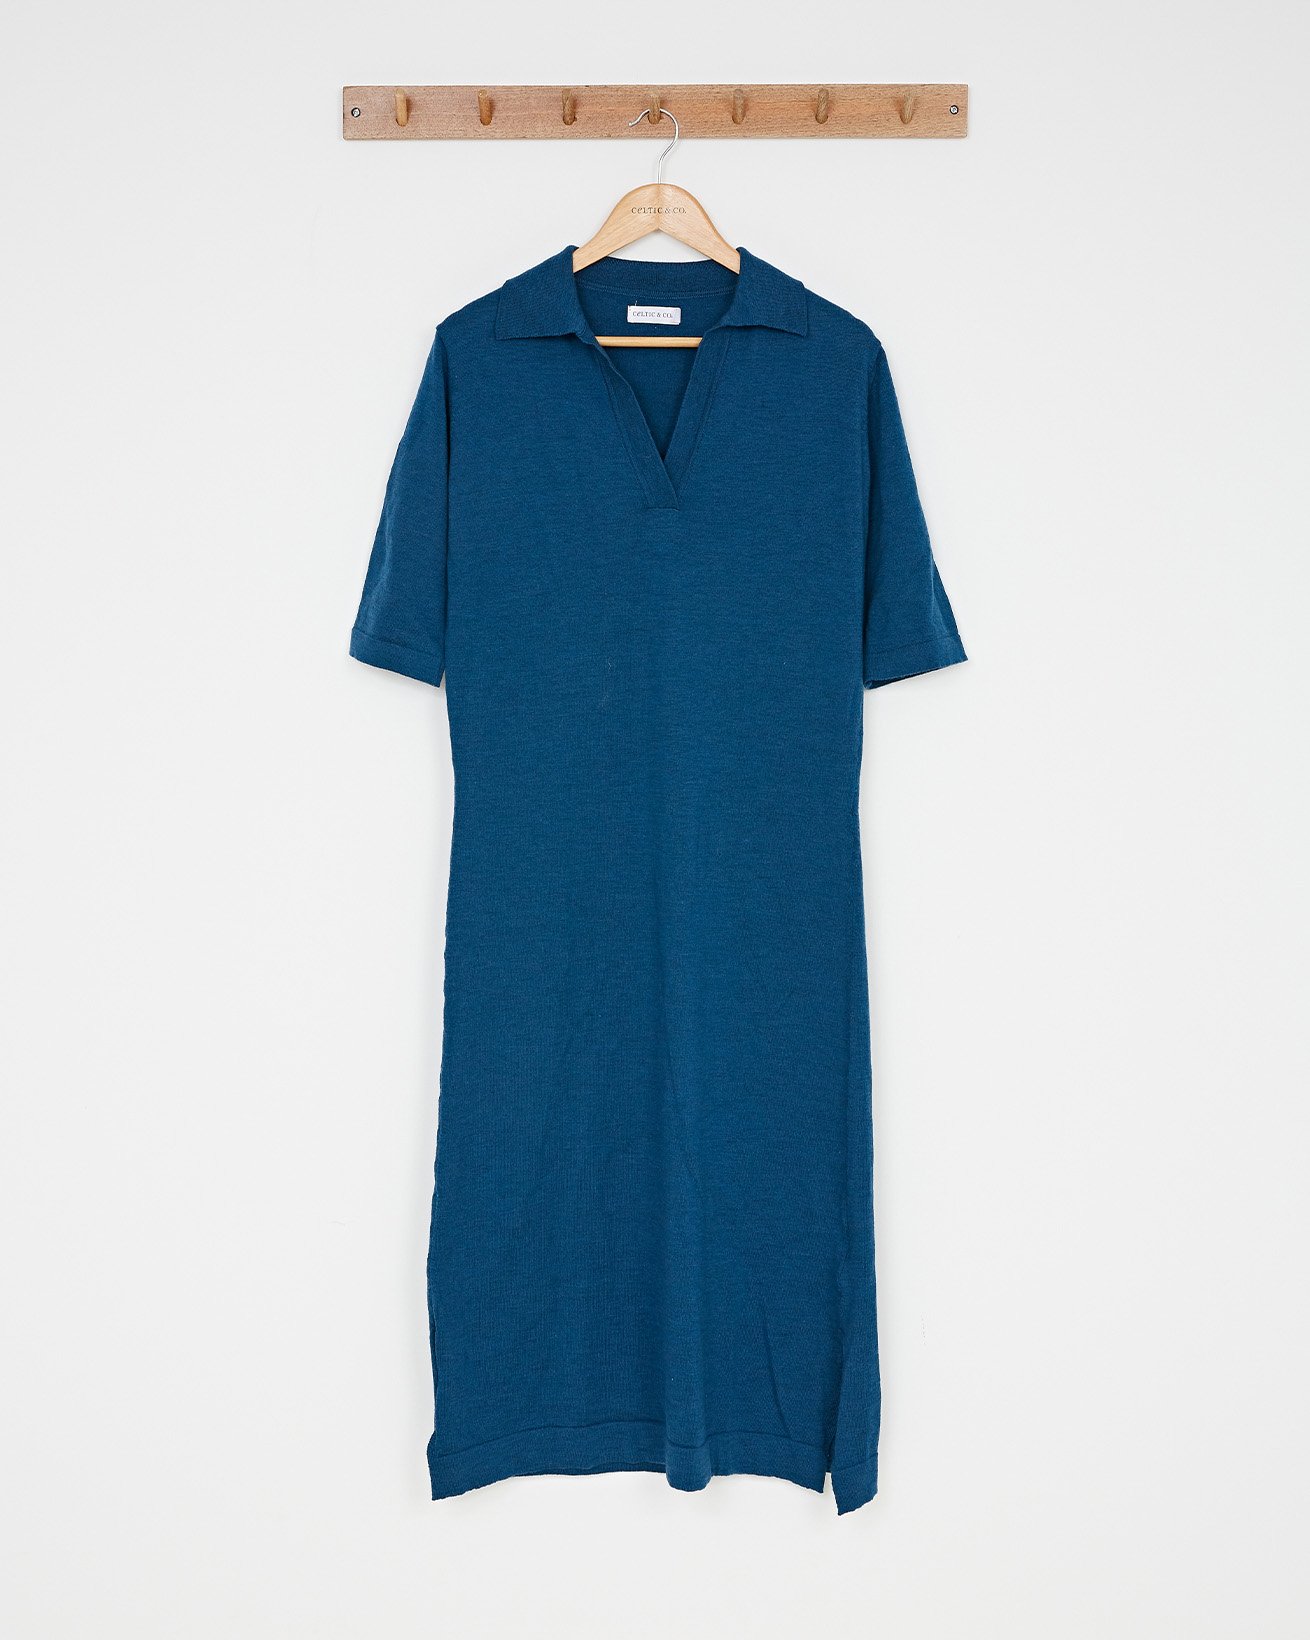 Polo Maxi Dress / Teal Blue / S